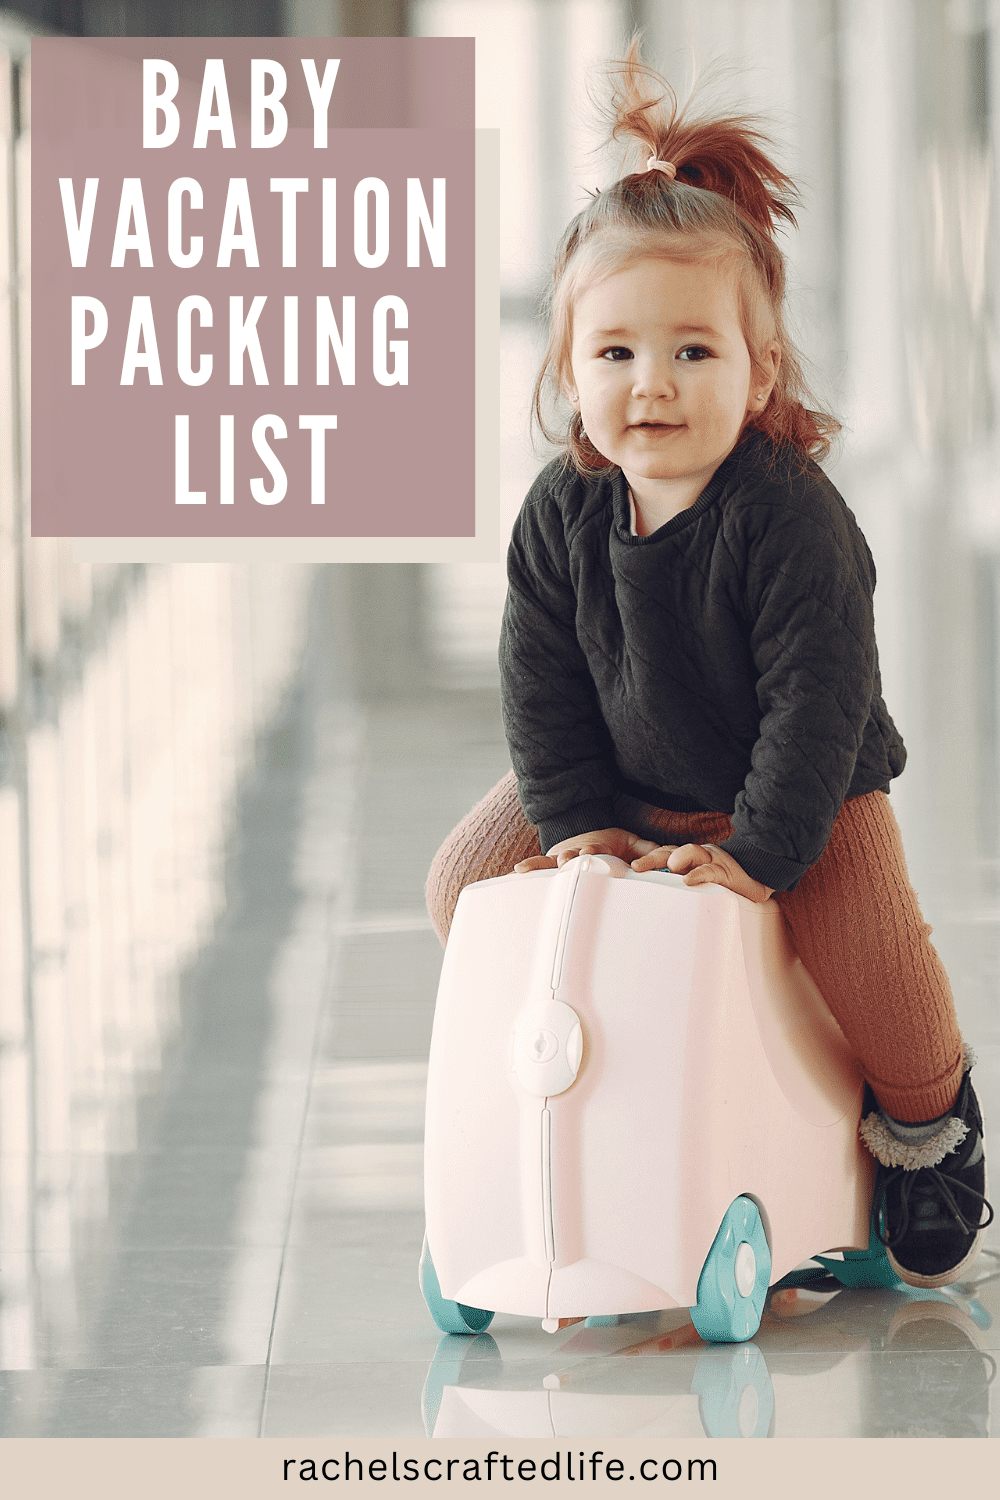 10 Road Trip Essentials for Toddlers - Full Life, Full Passport